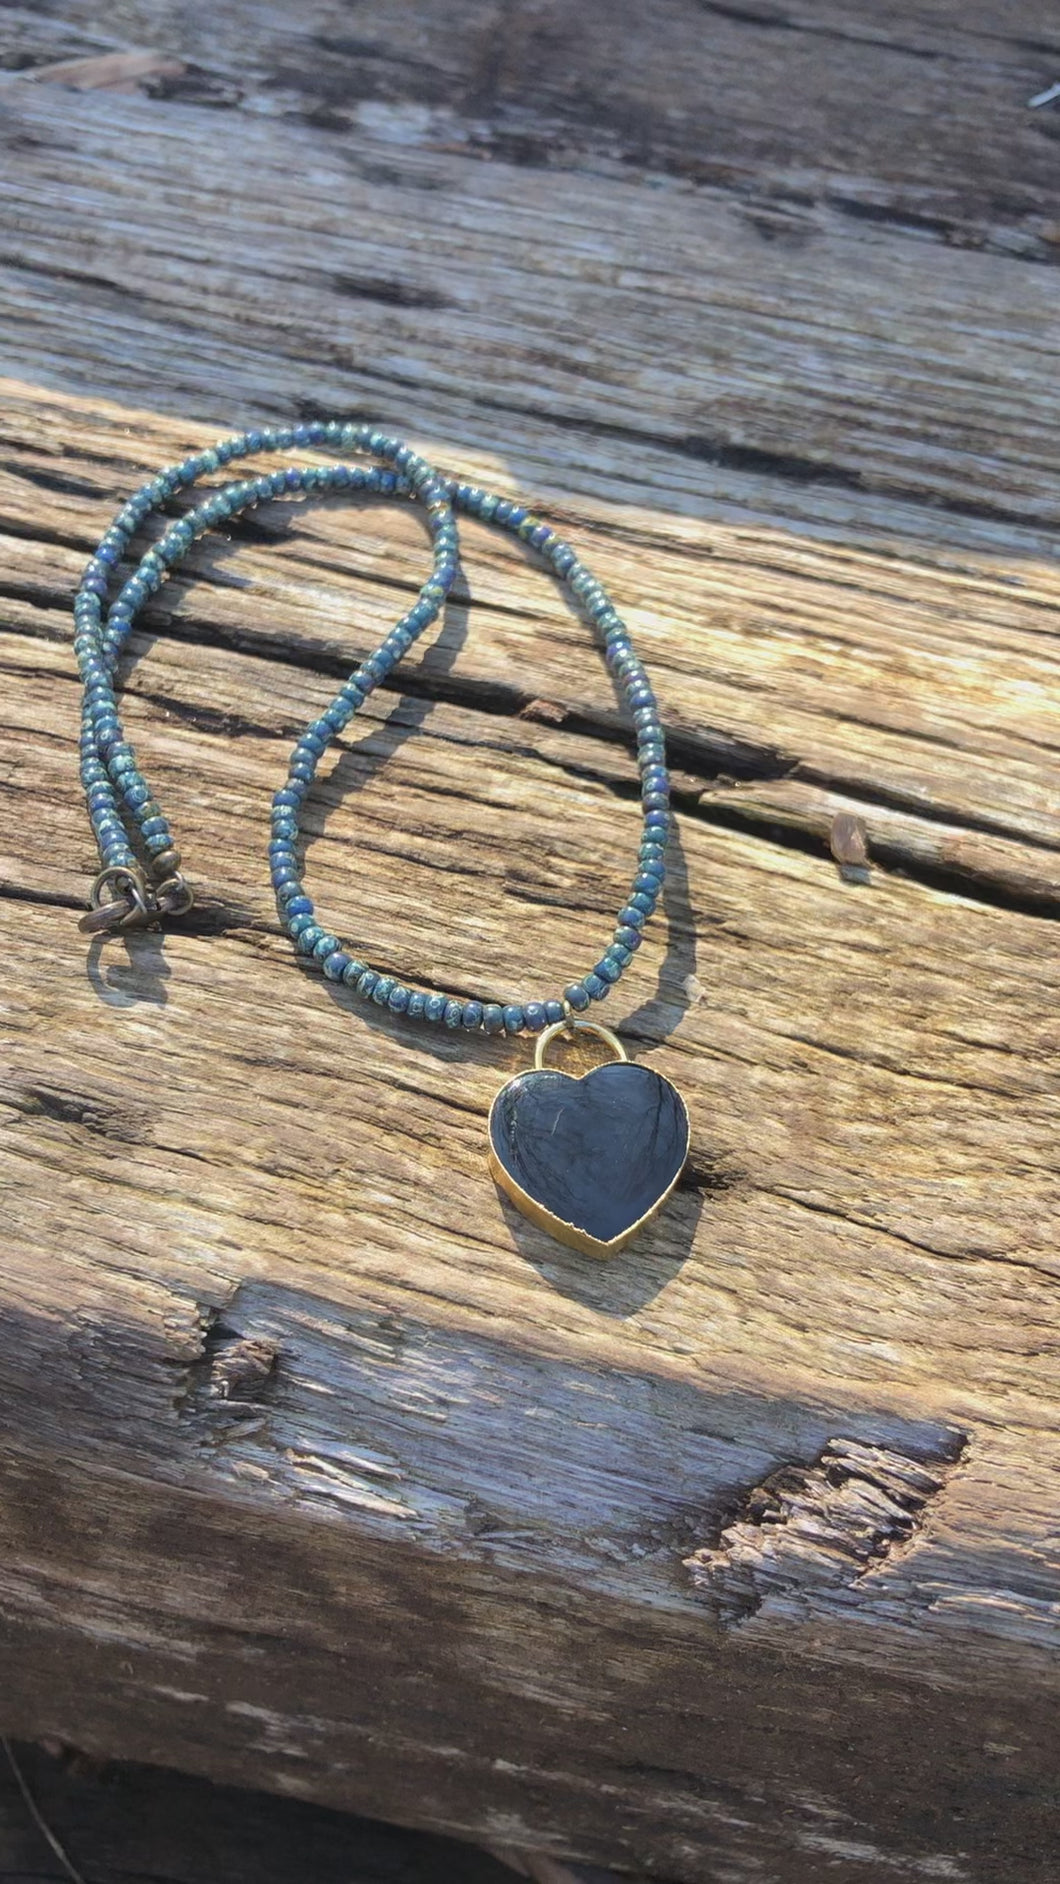 Black onyx heart on a beaded chain